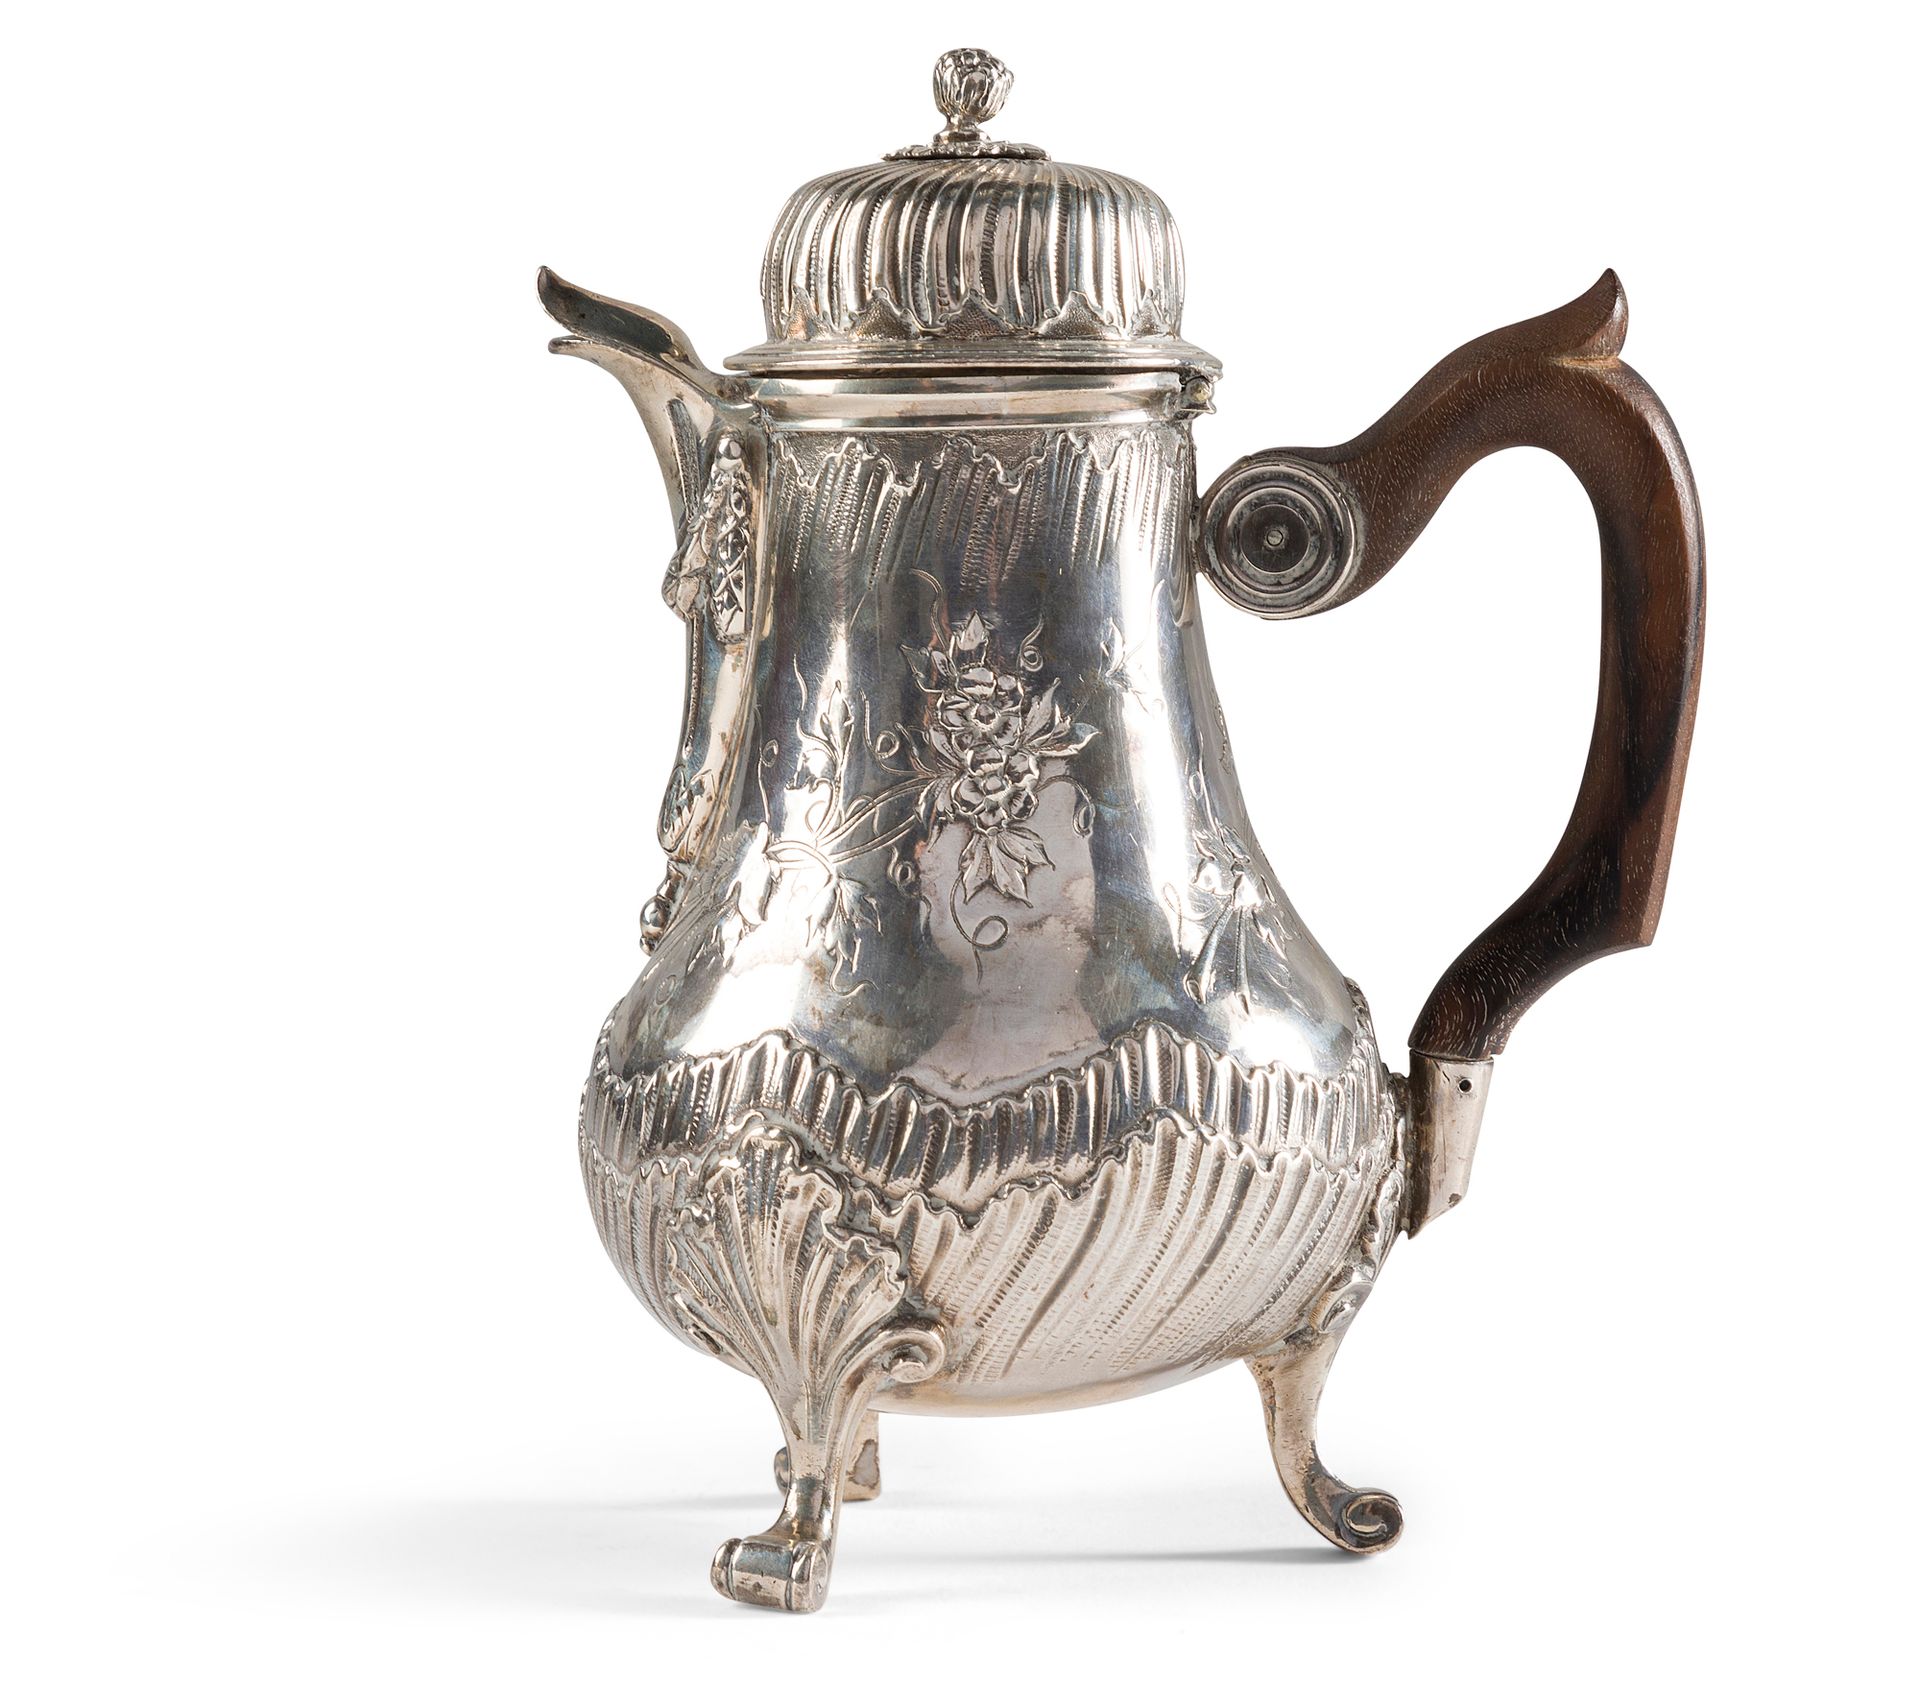 Null 一个小的银质柱状咖啡壶（Minerve第一标题），壶身装饰着波浪和花环。它站在三个滚动的脚上。木制手柄。

L.吕梁日报》：《吕梁日报》：《吕梁日报》&hellip;